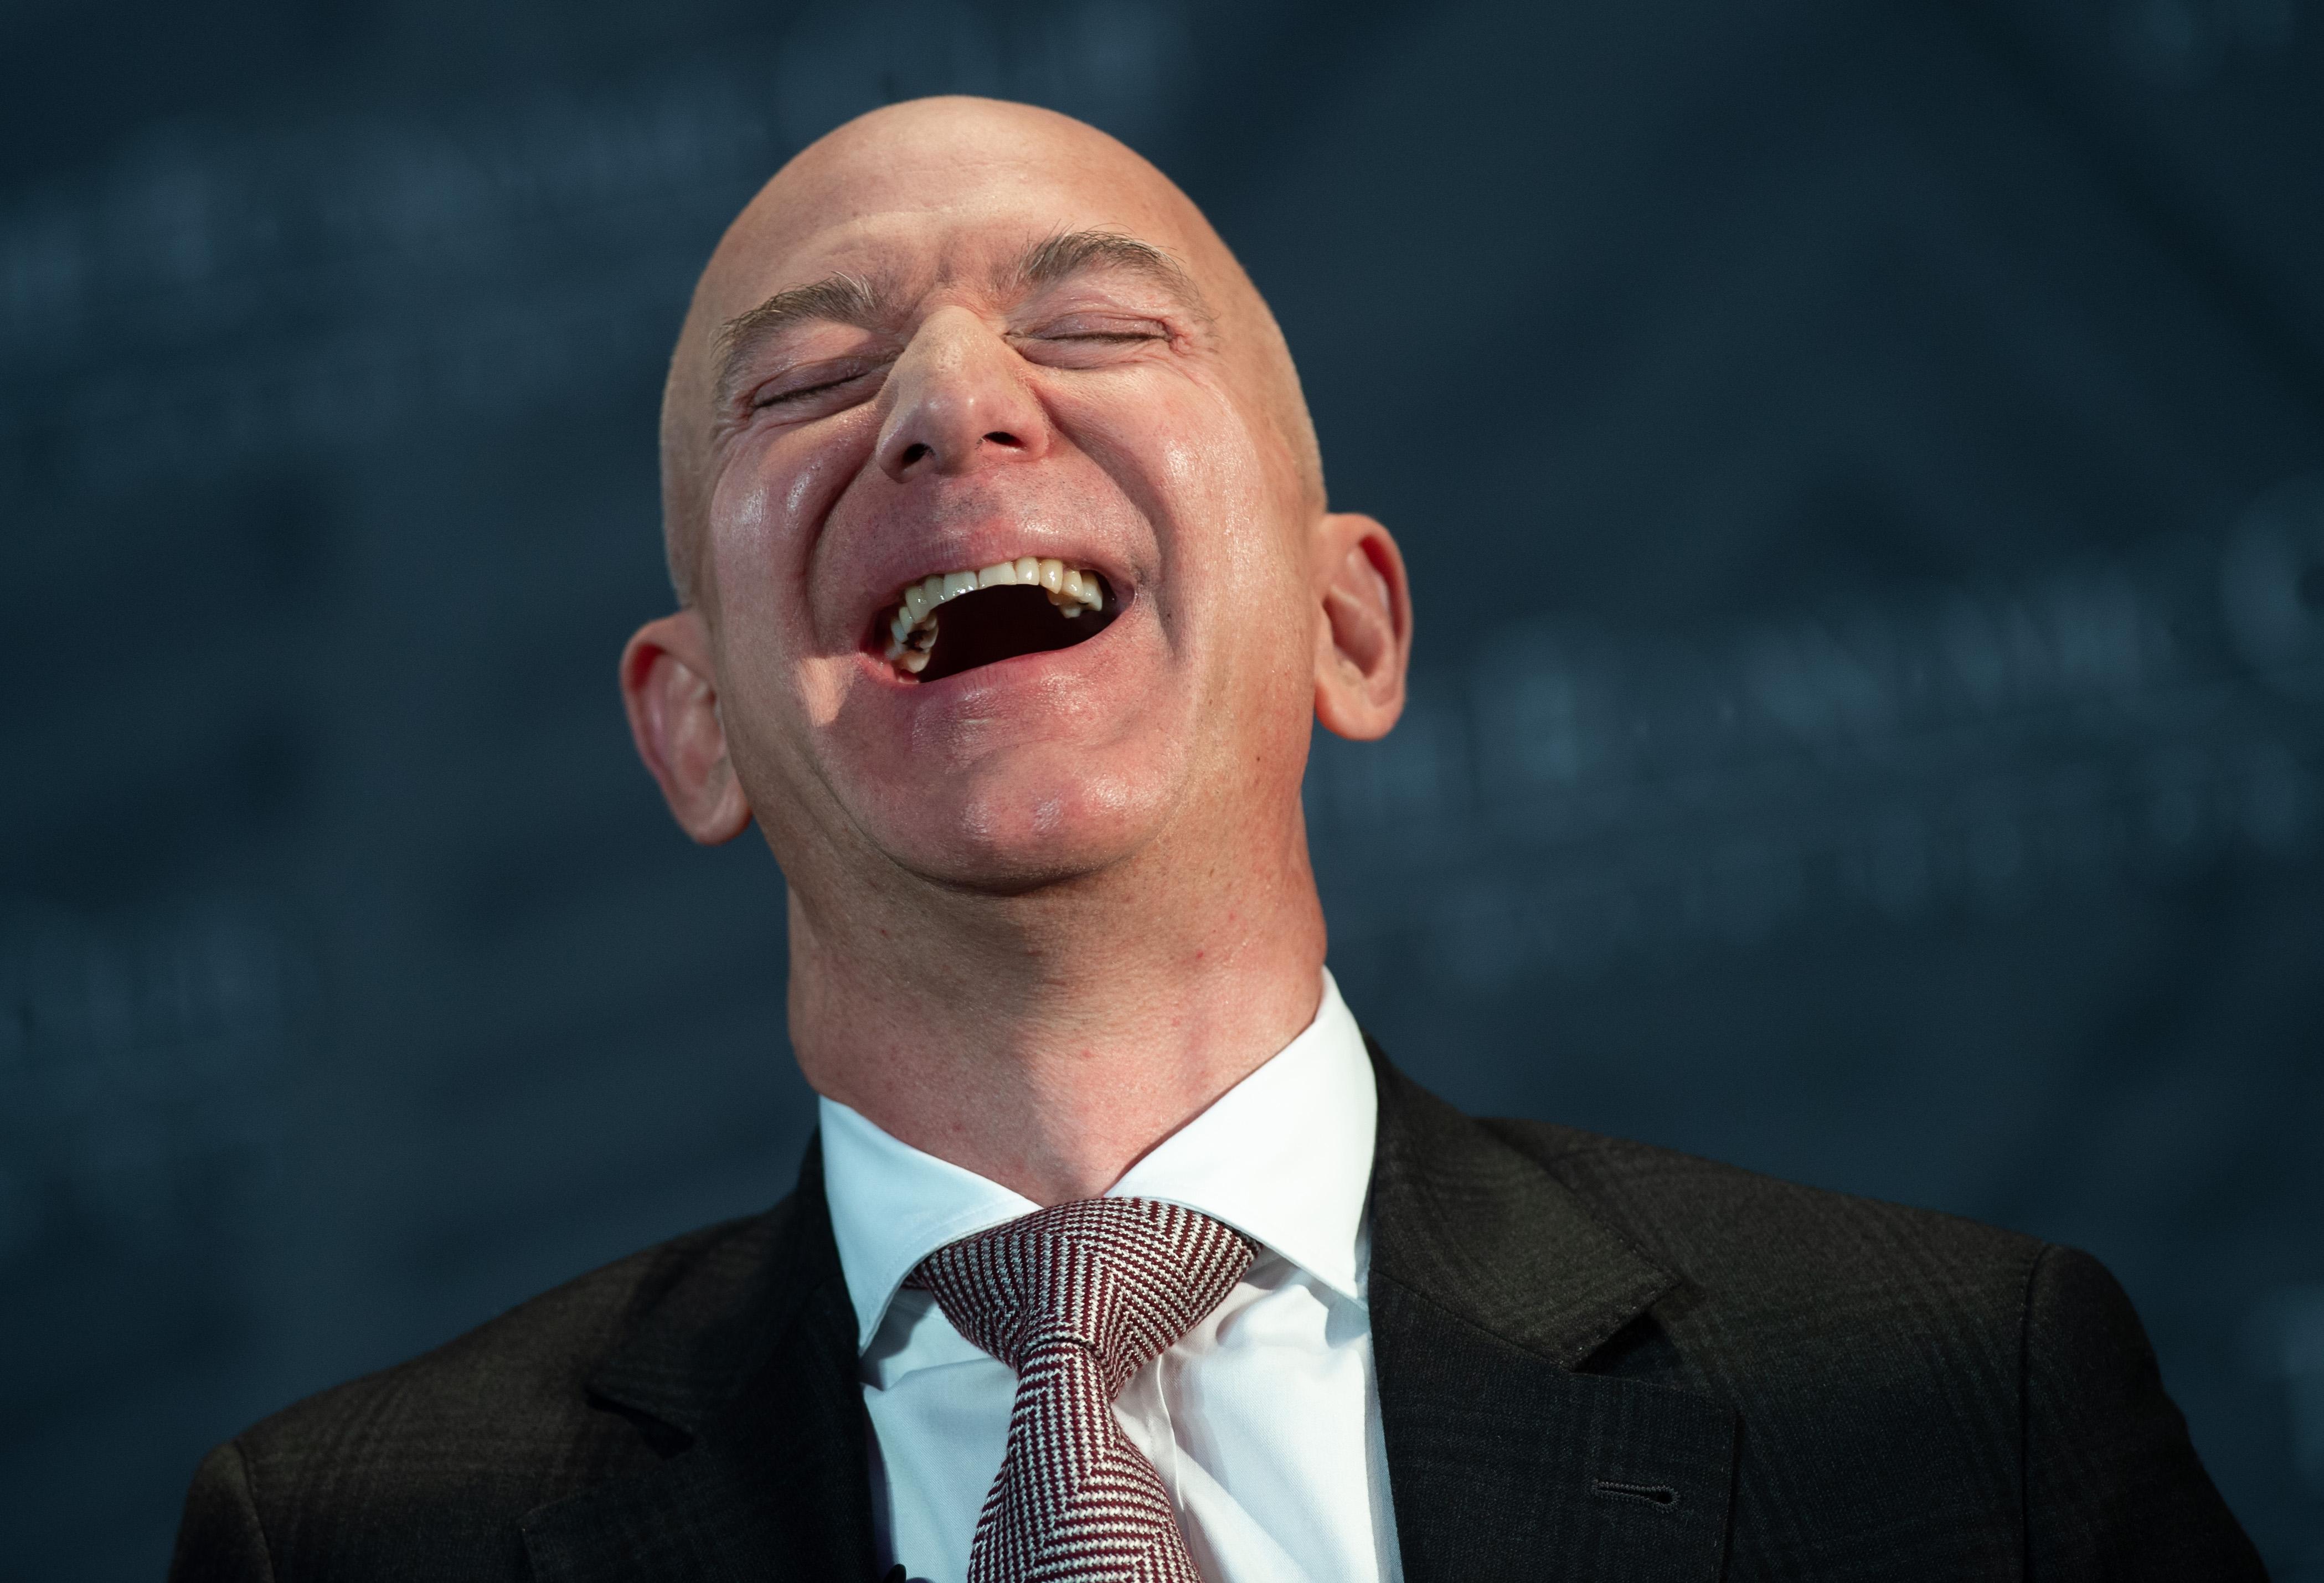 ‘Amazon’ Boss Jeff Bezos Just Got $13.2 Billion Richer In Just 15 MINUTES!!